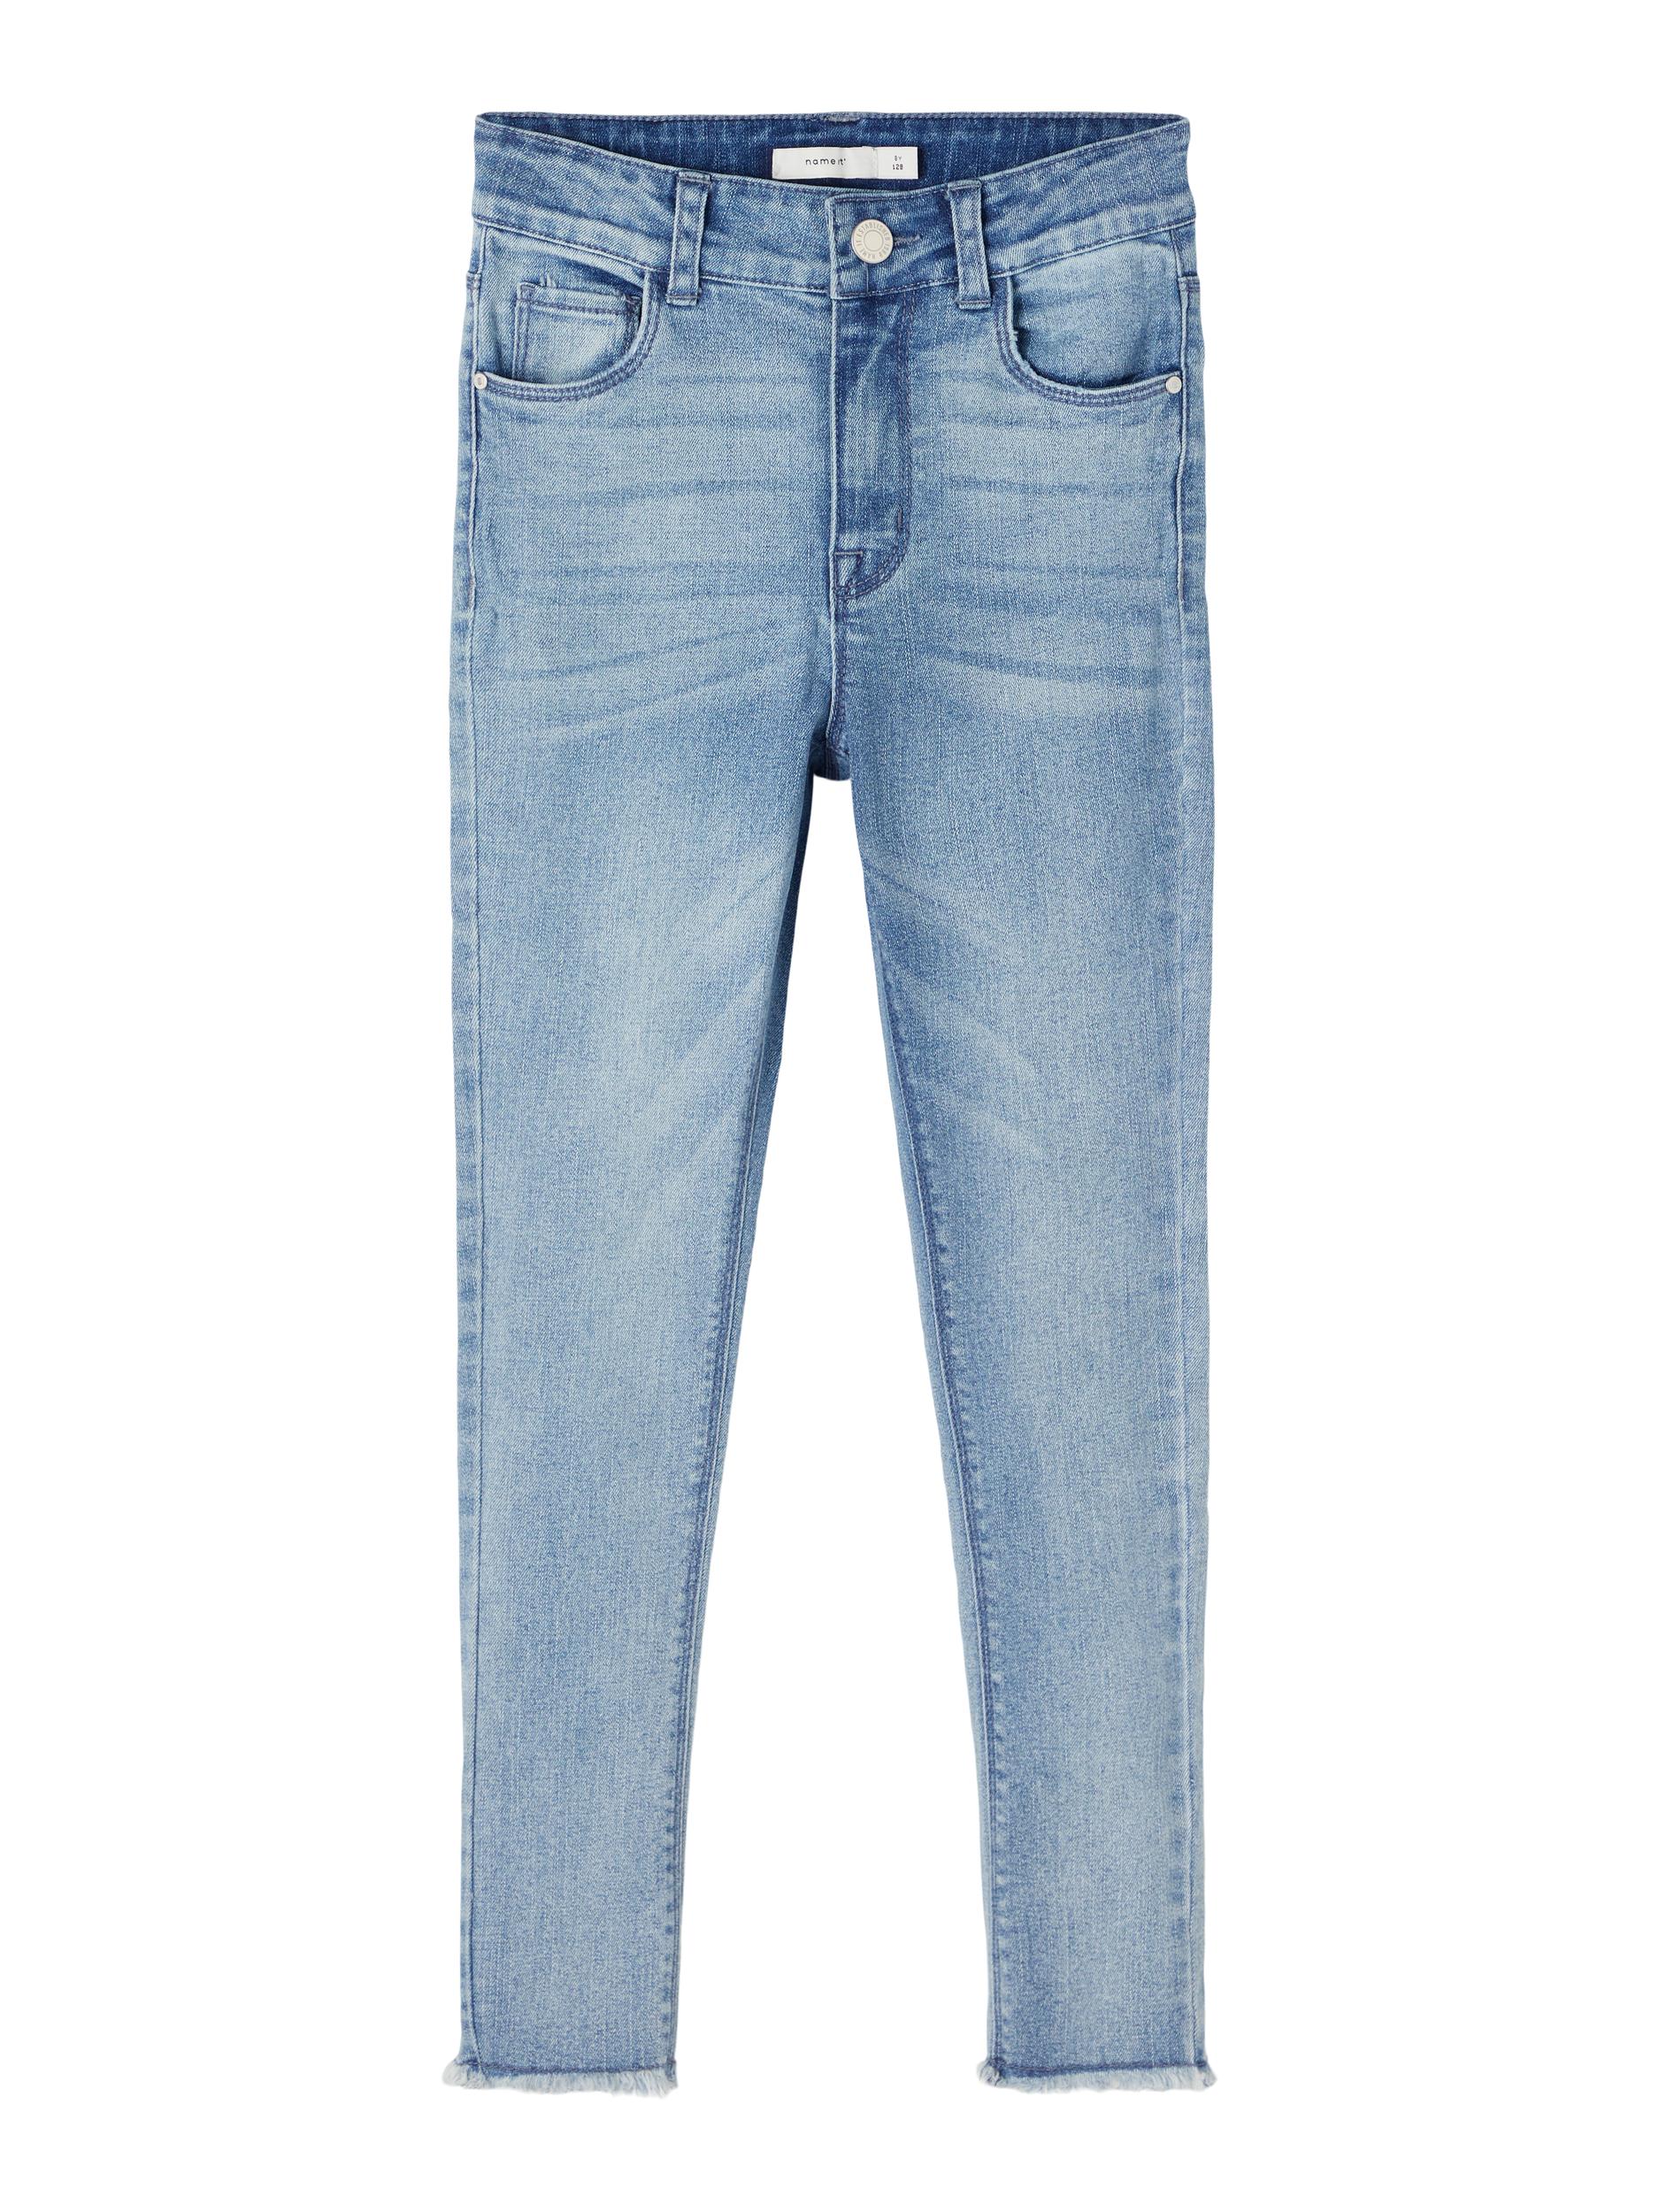  Polly Jeans, Medium Blue Denim, 116 cm